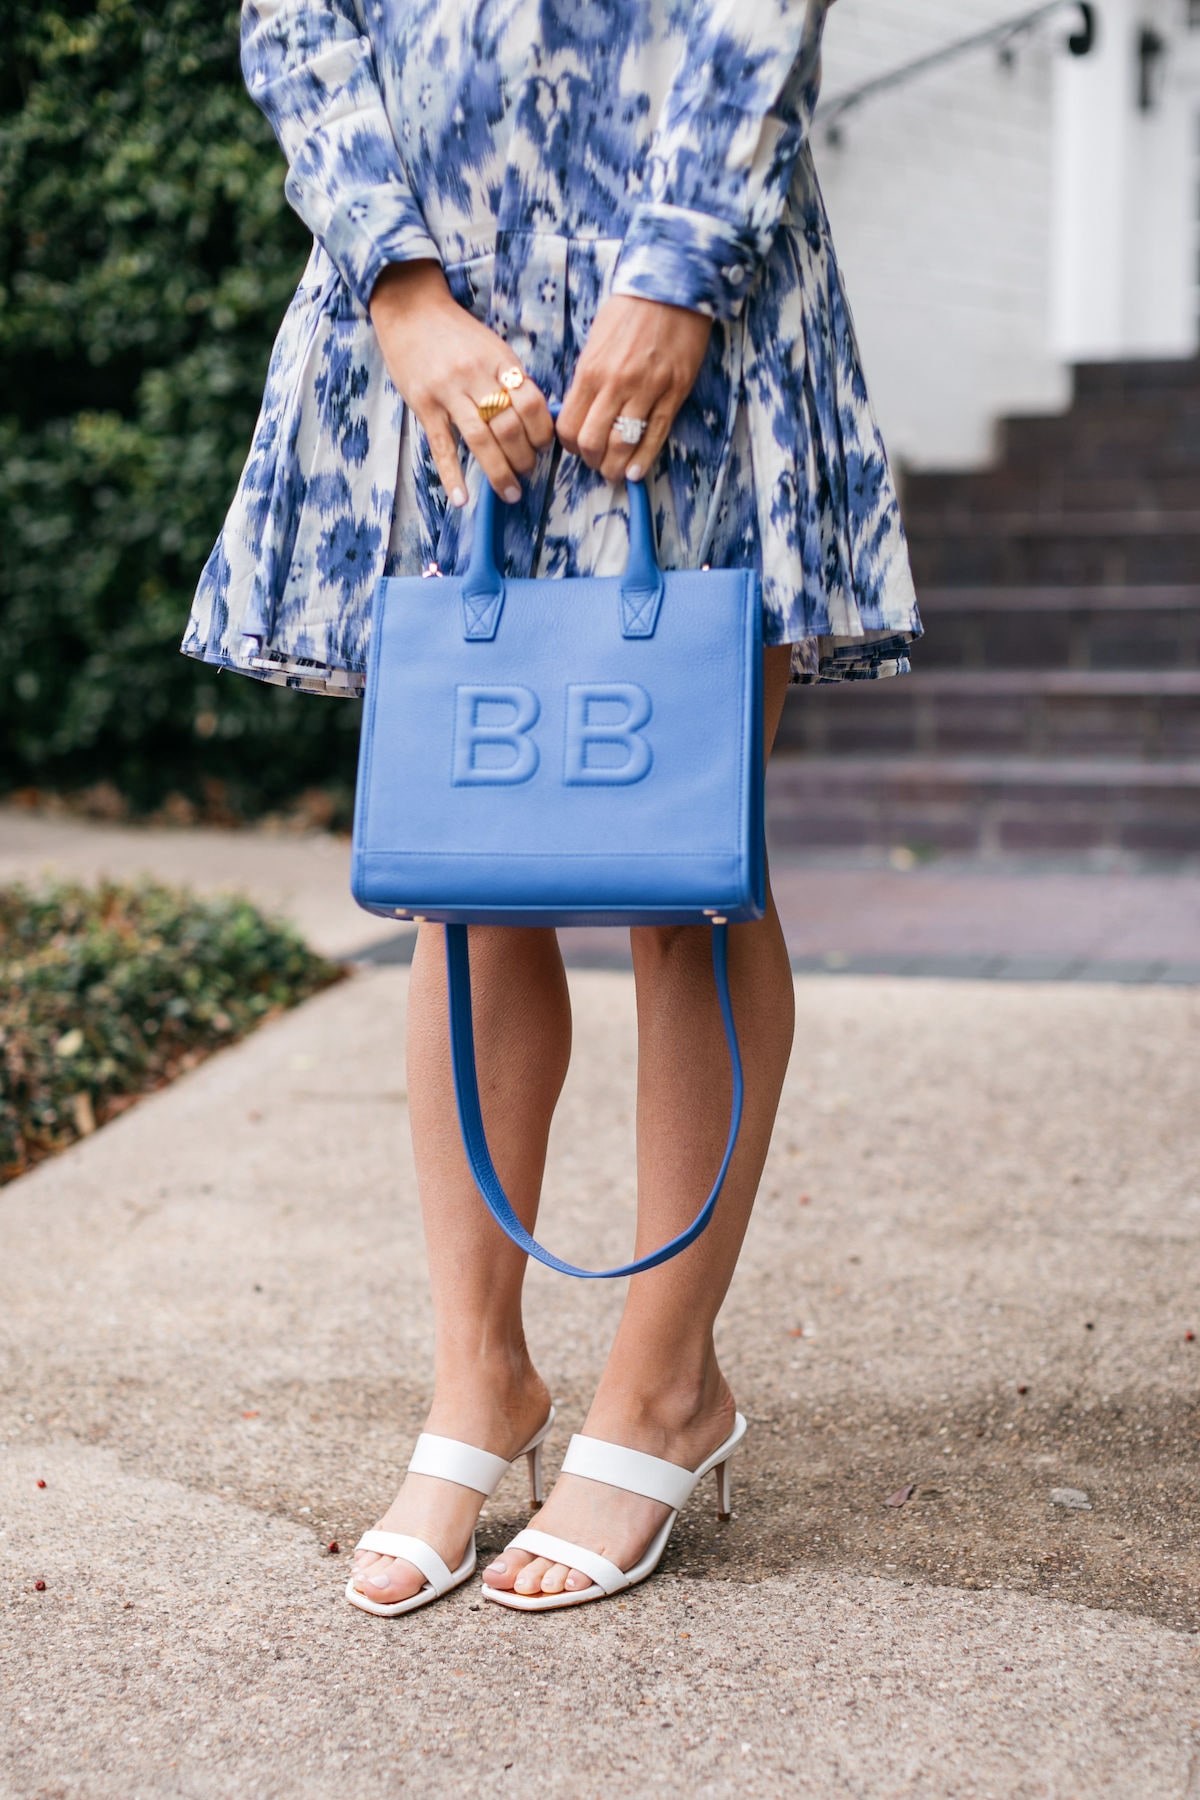 Brighont Butler wearing blue leatherology bag with blue tuckernuck dress